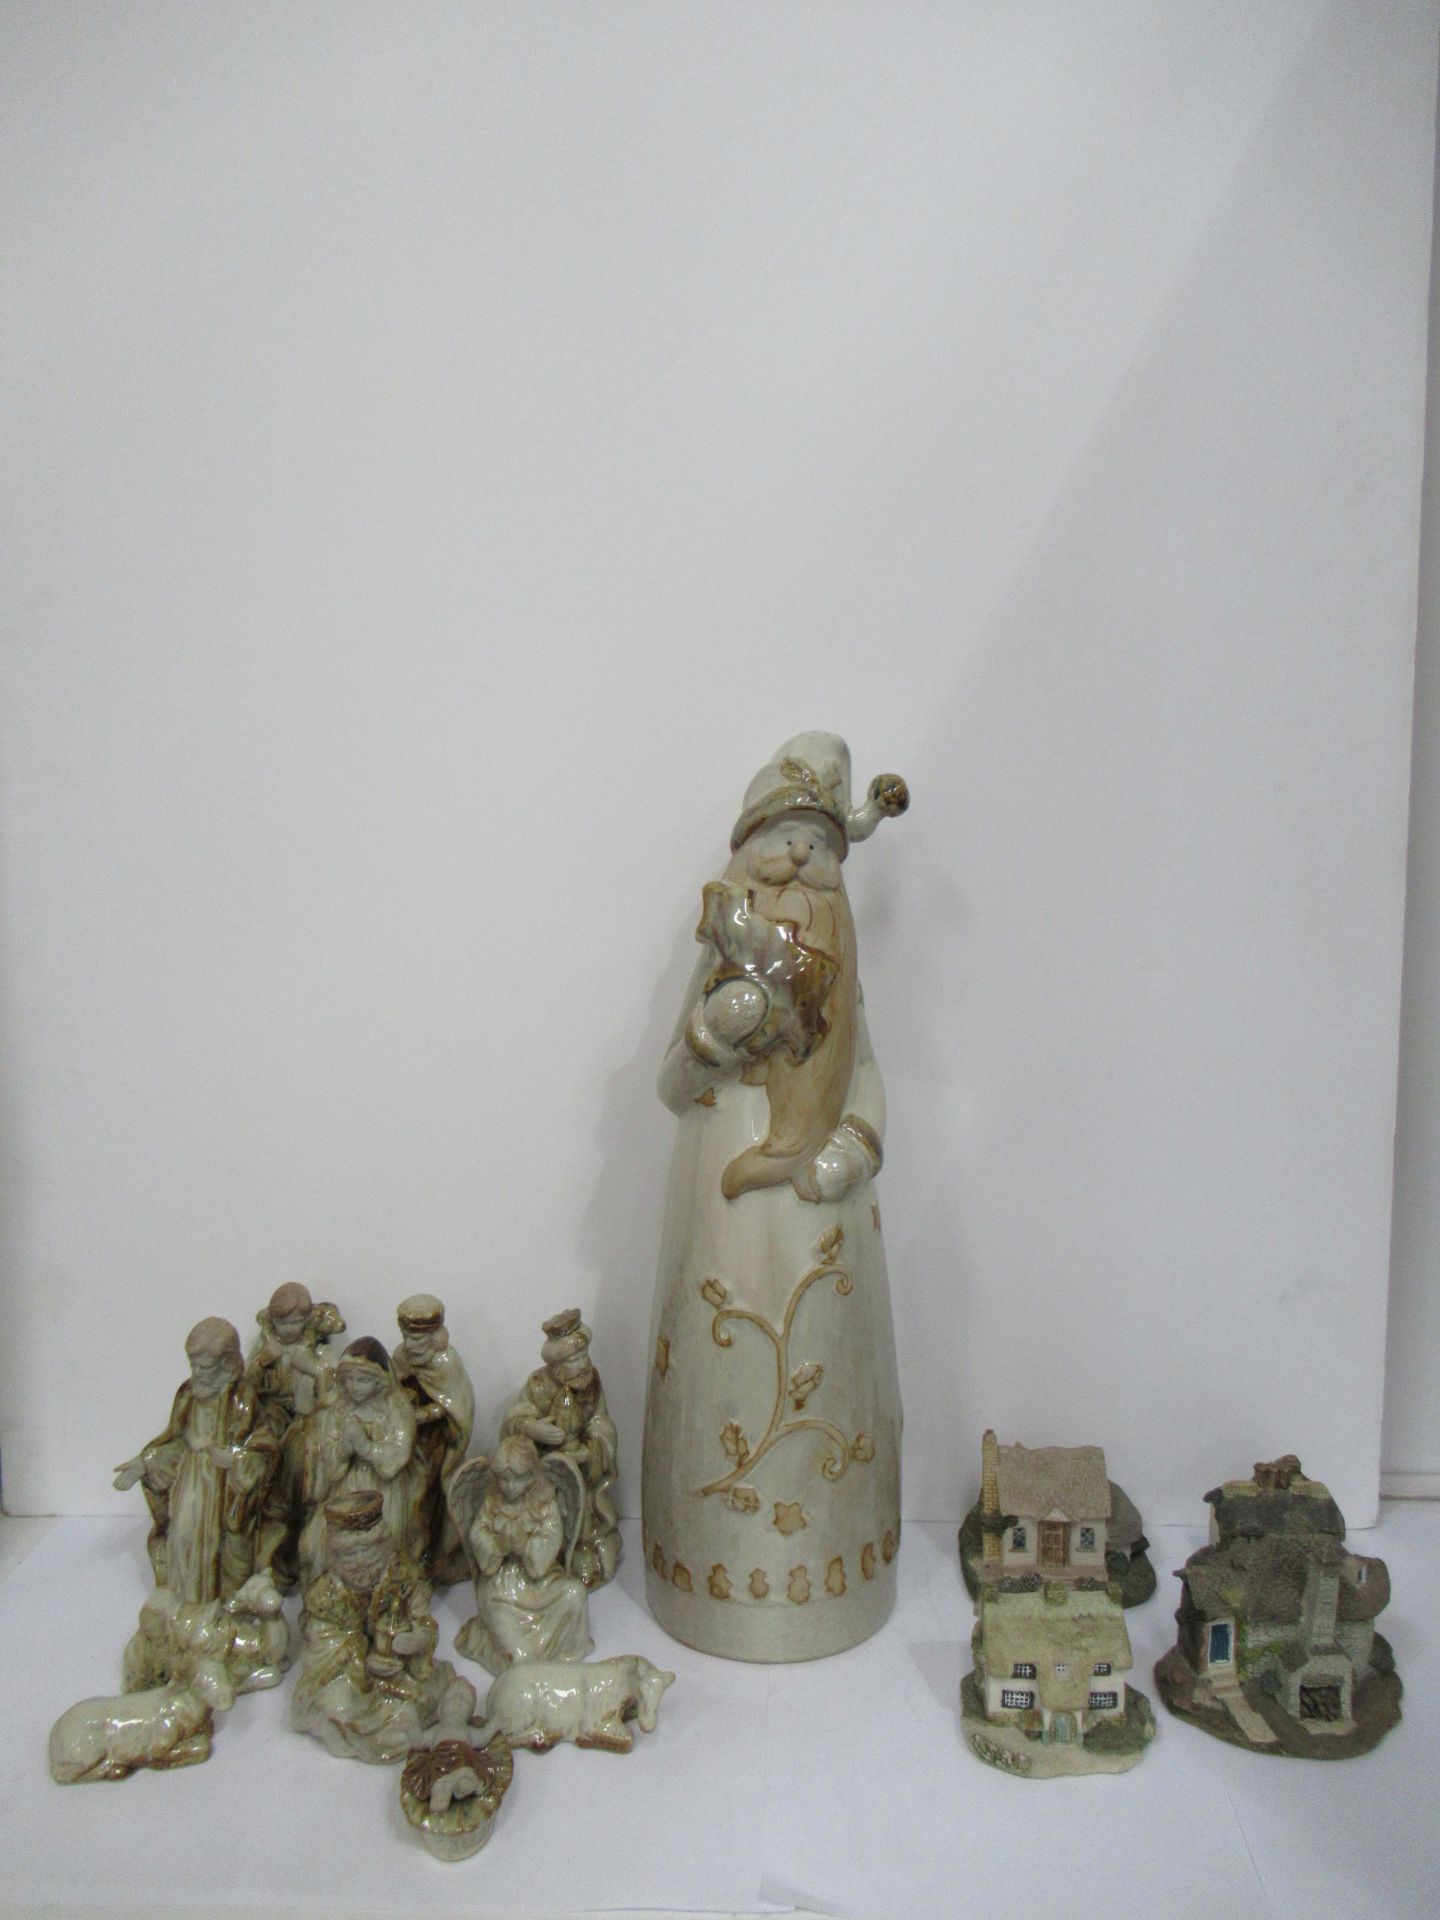 Nativity scene, 4x model houses and tall figure of Santa